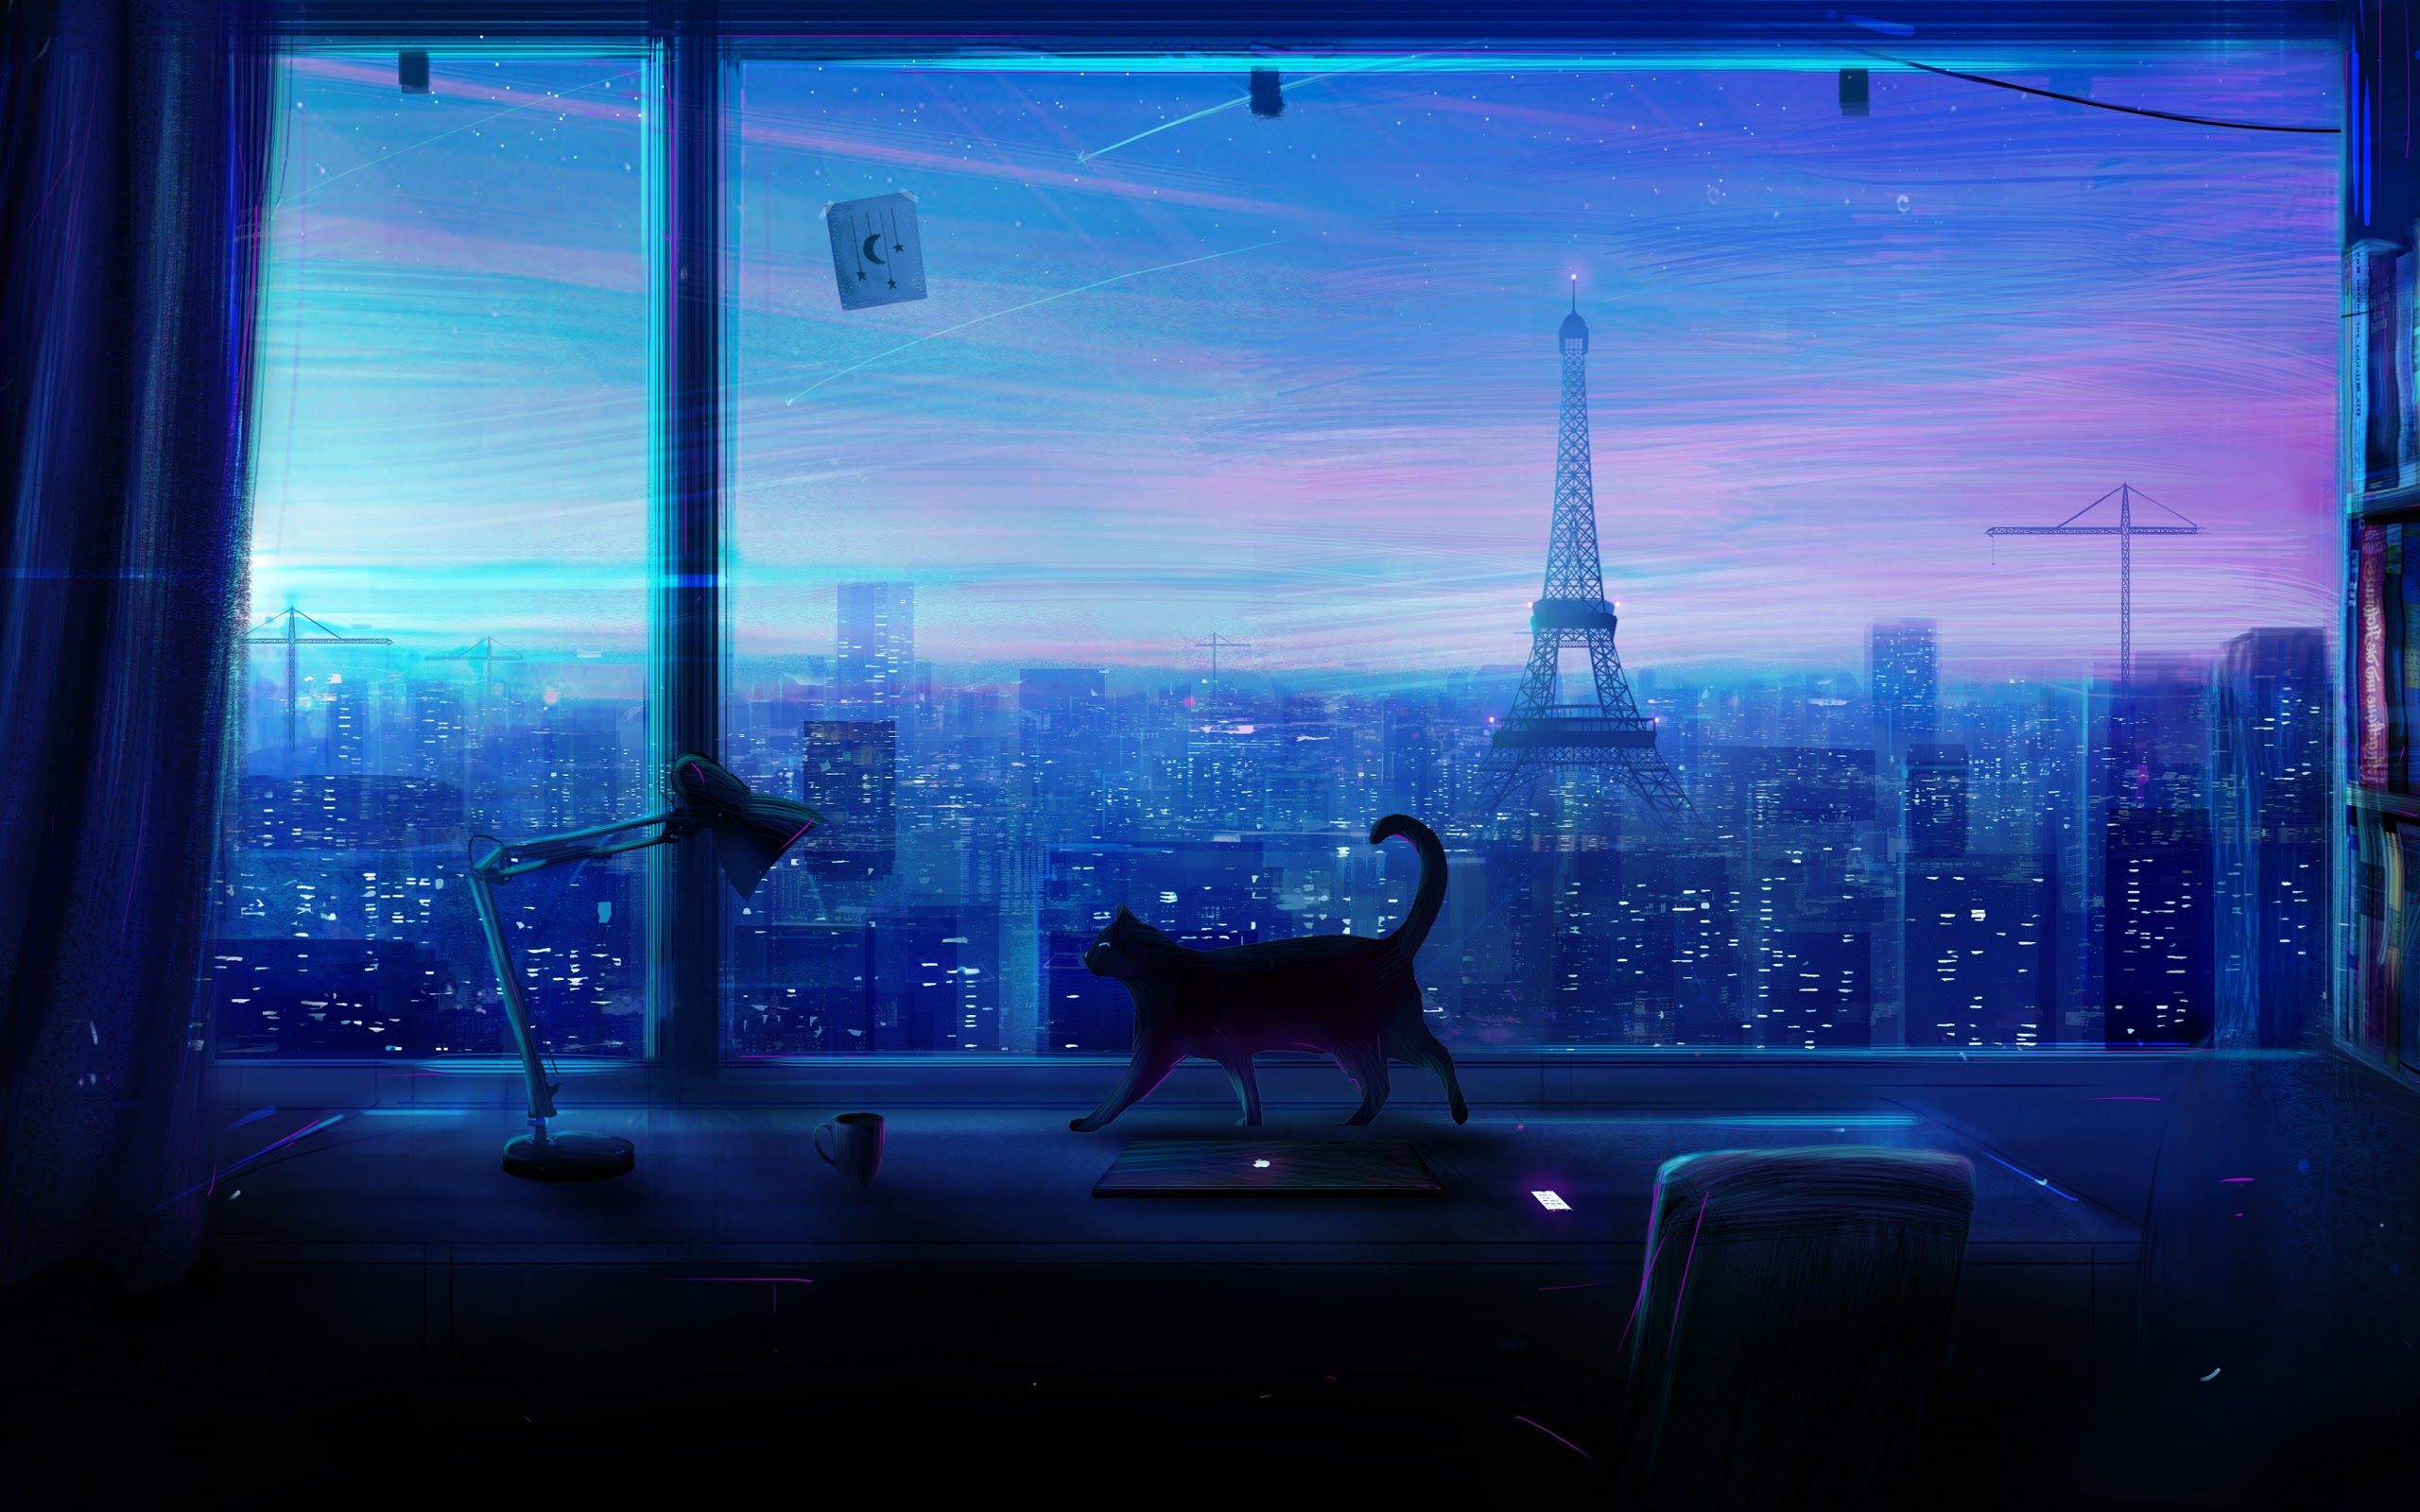 Anime City Night Wallpaper